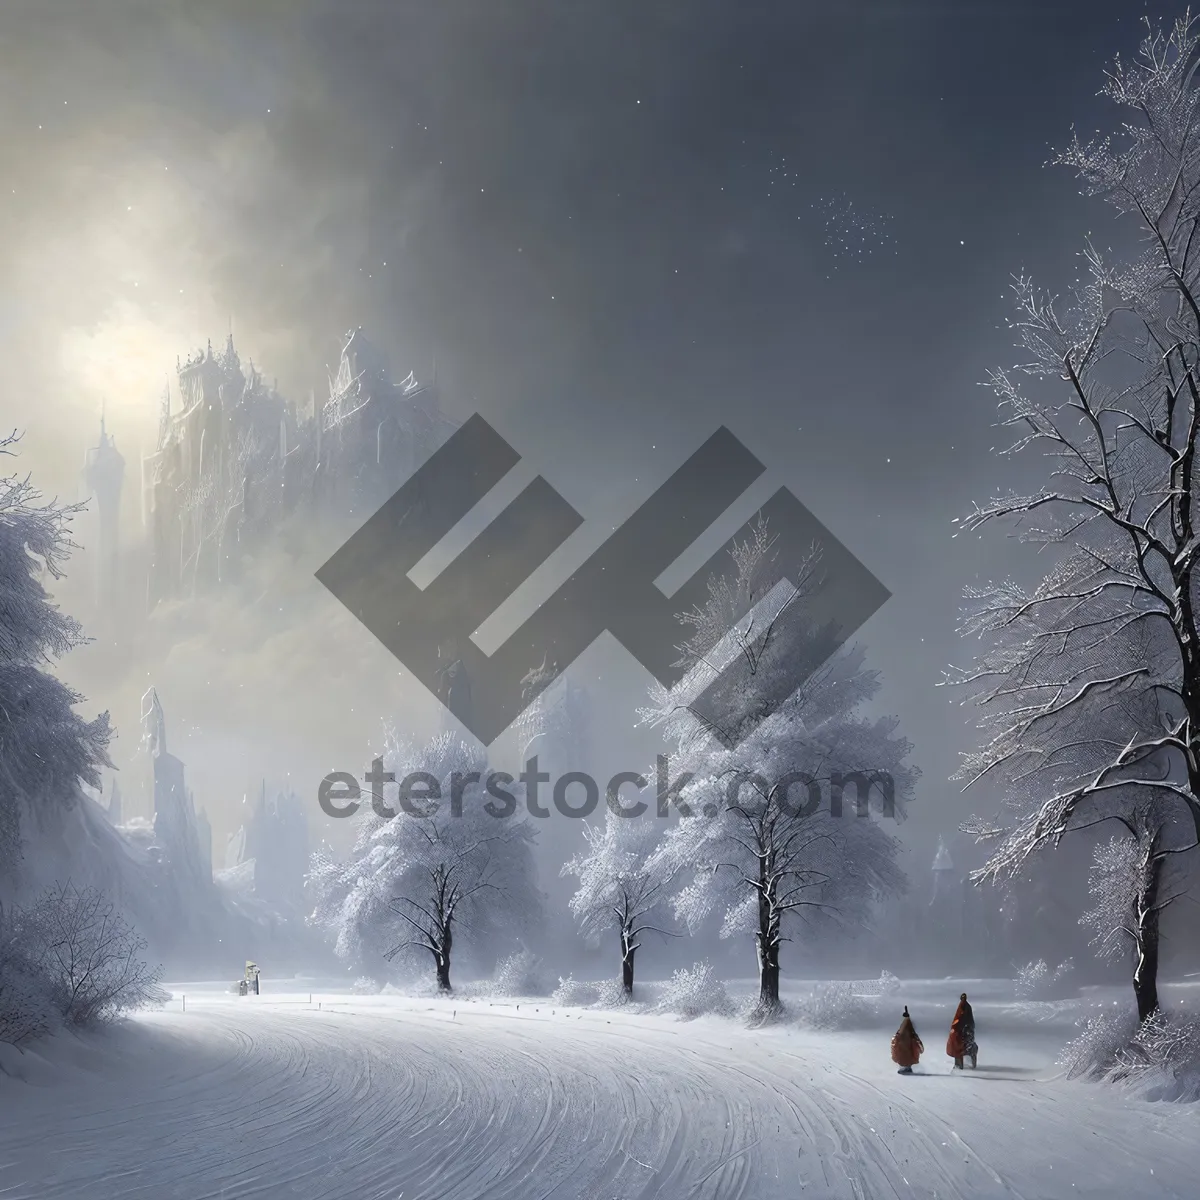 Picture of Winter Wonderland: Majestic Ski Slope through Frozen Forest